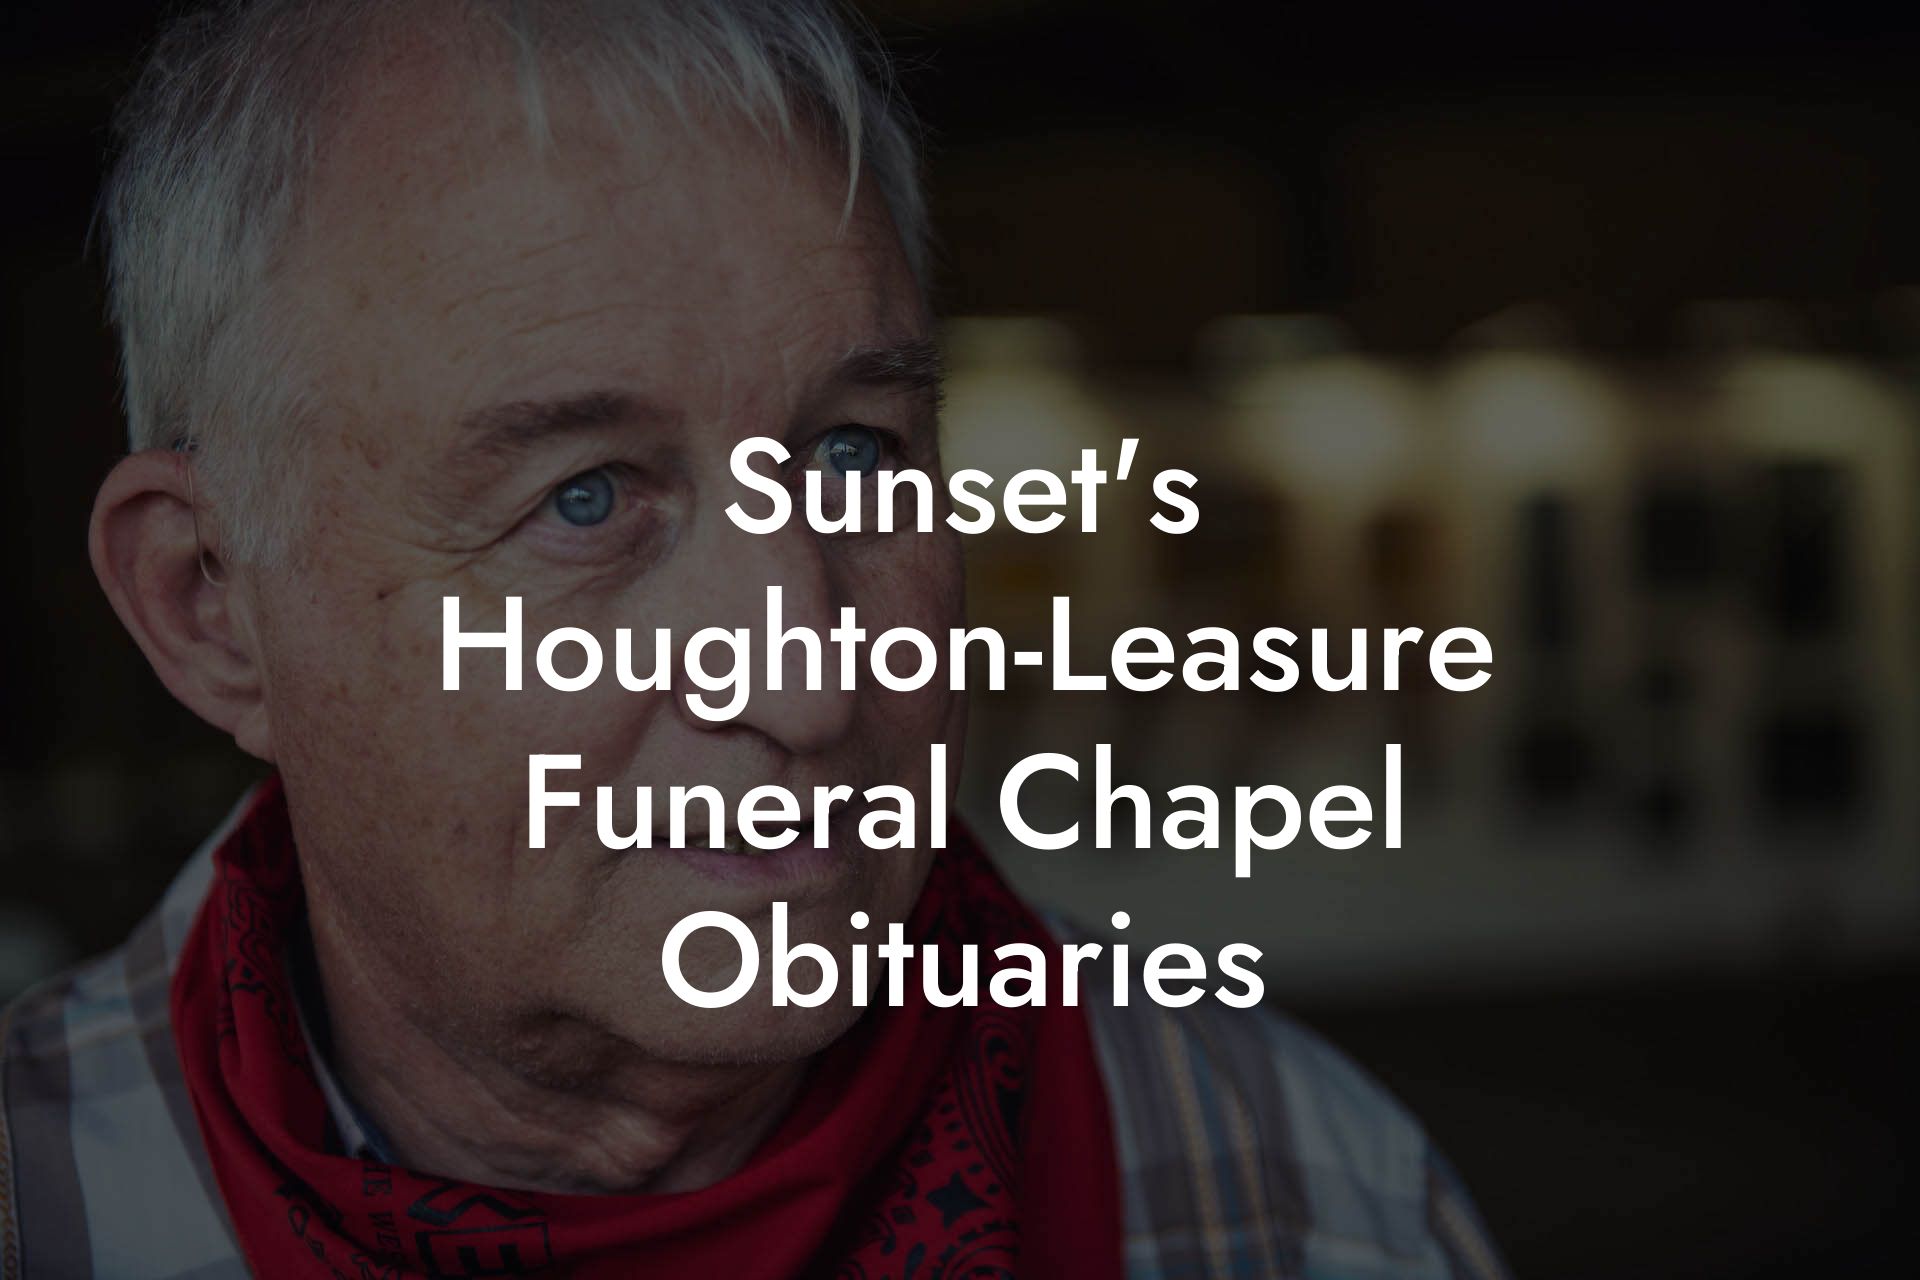 Sunset's Houghton-Leasure Funeral Chapel Obituaries